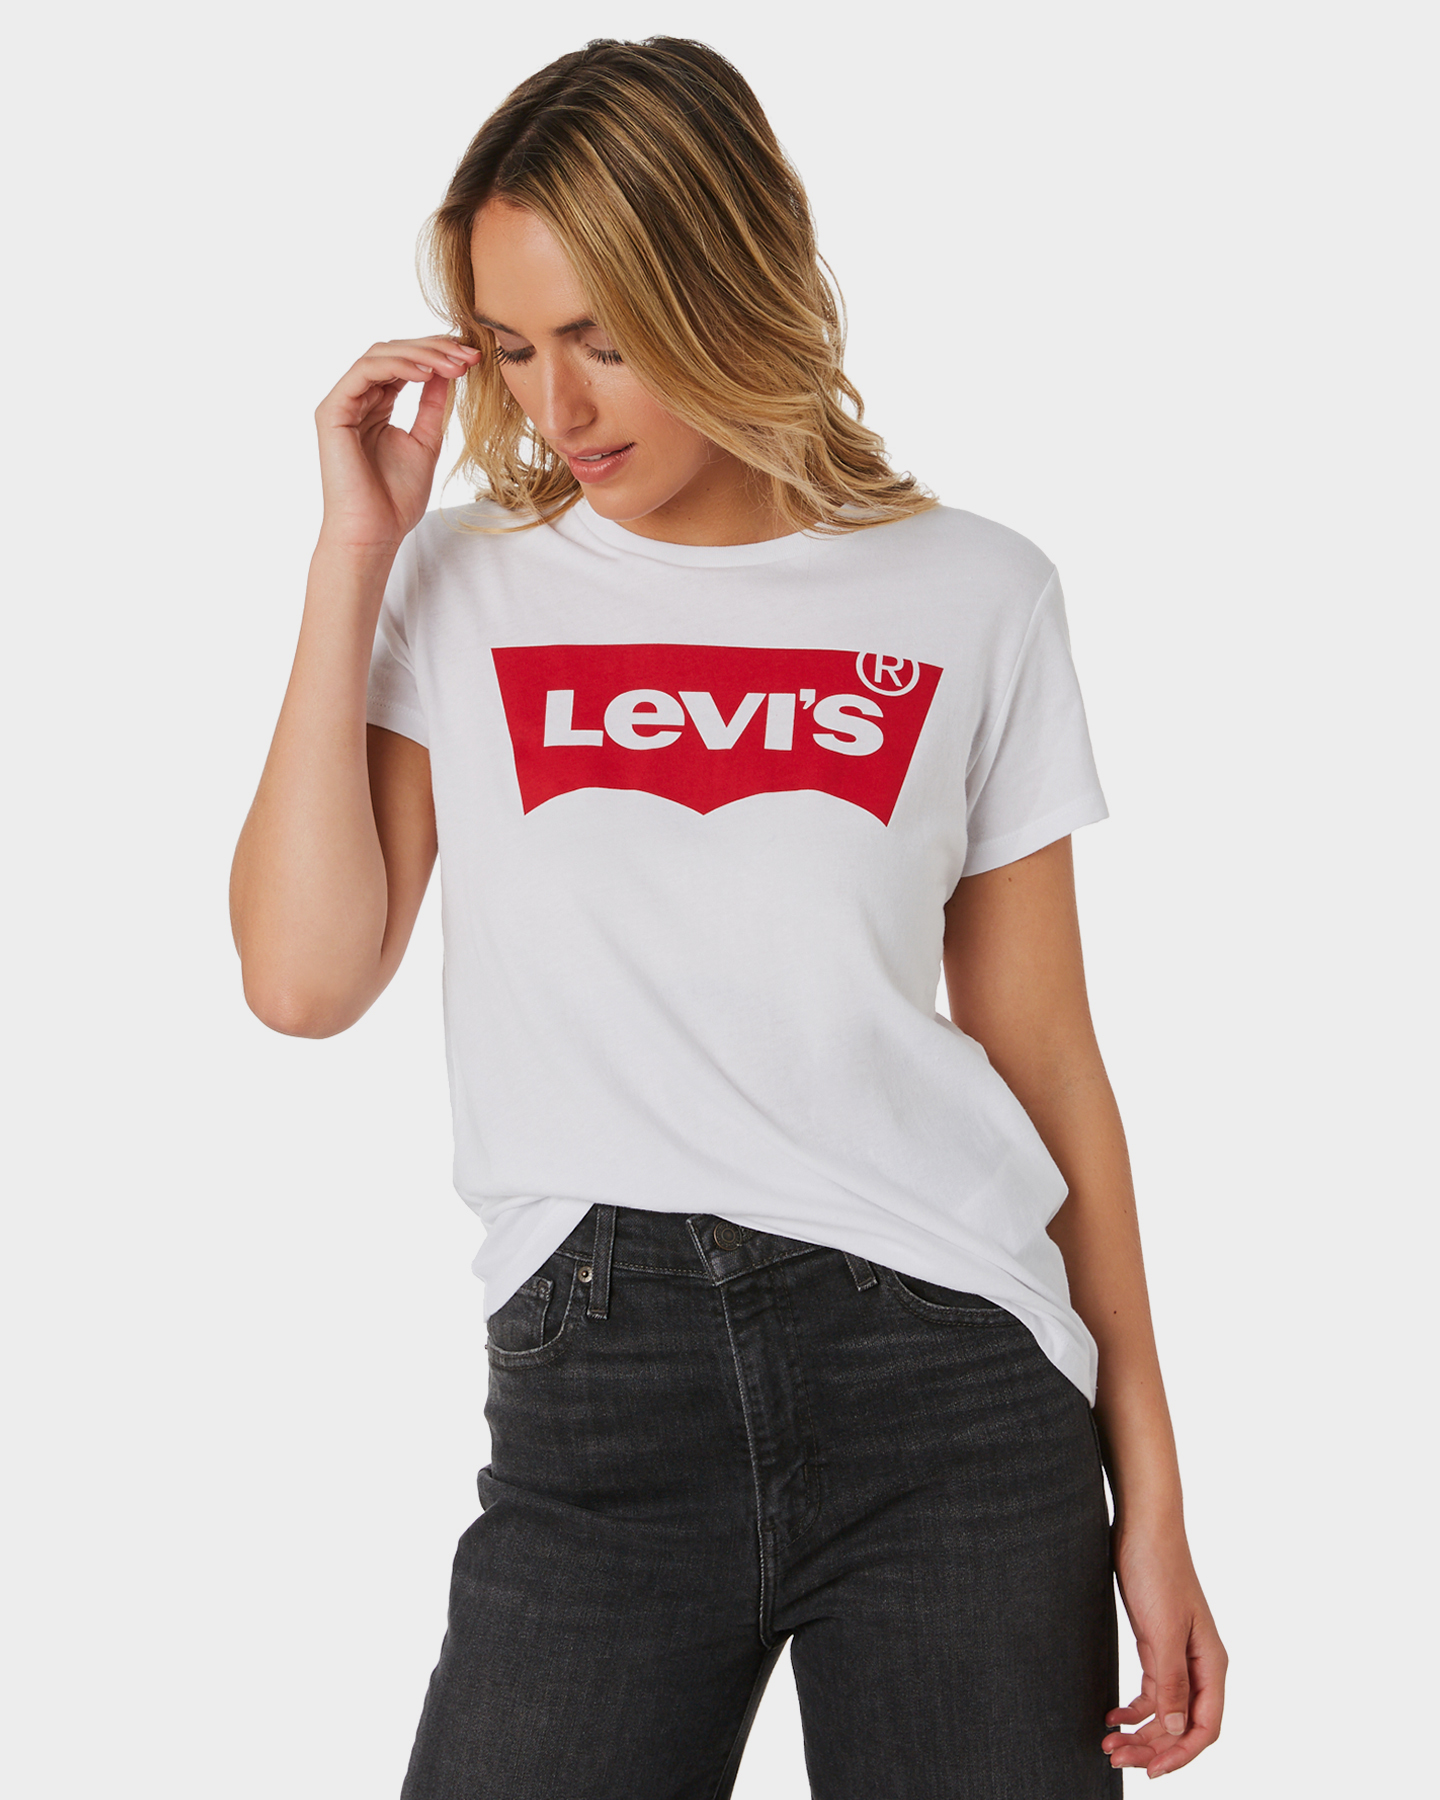 levis shirt womens price